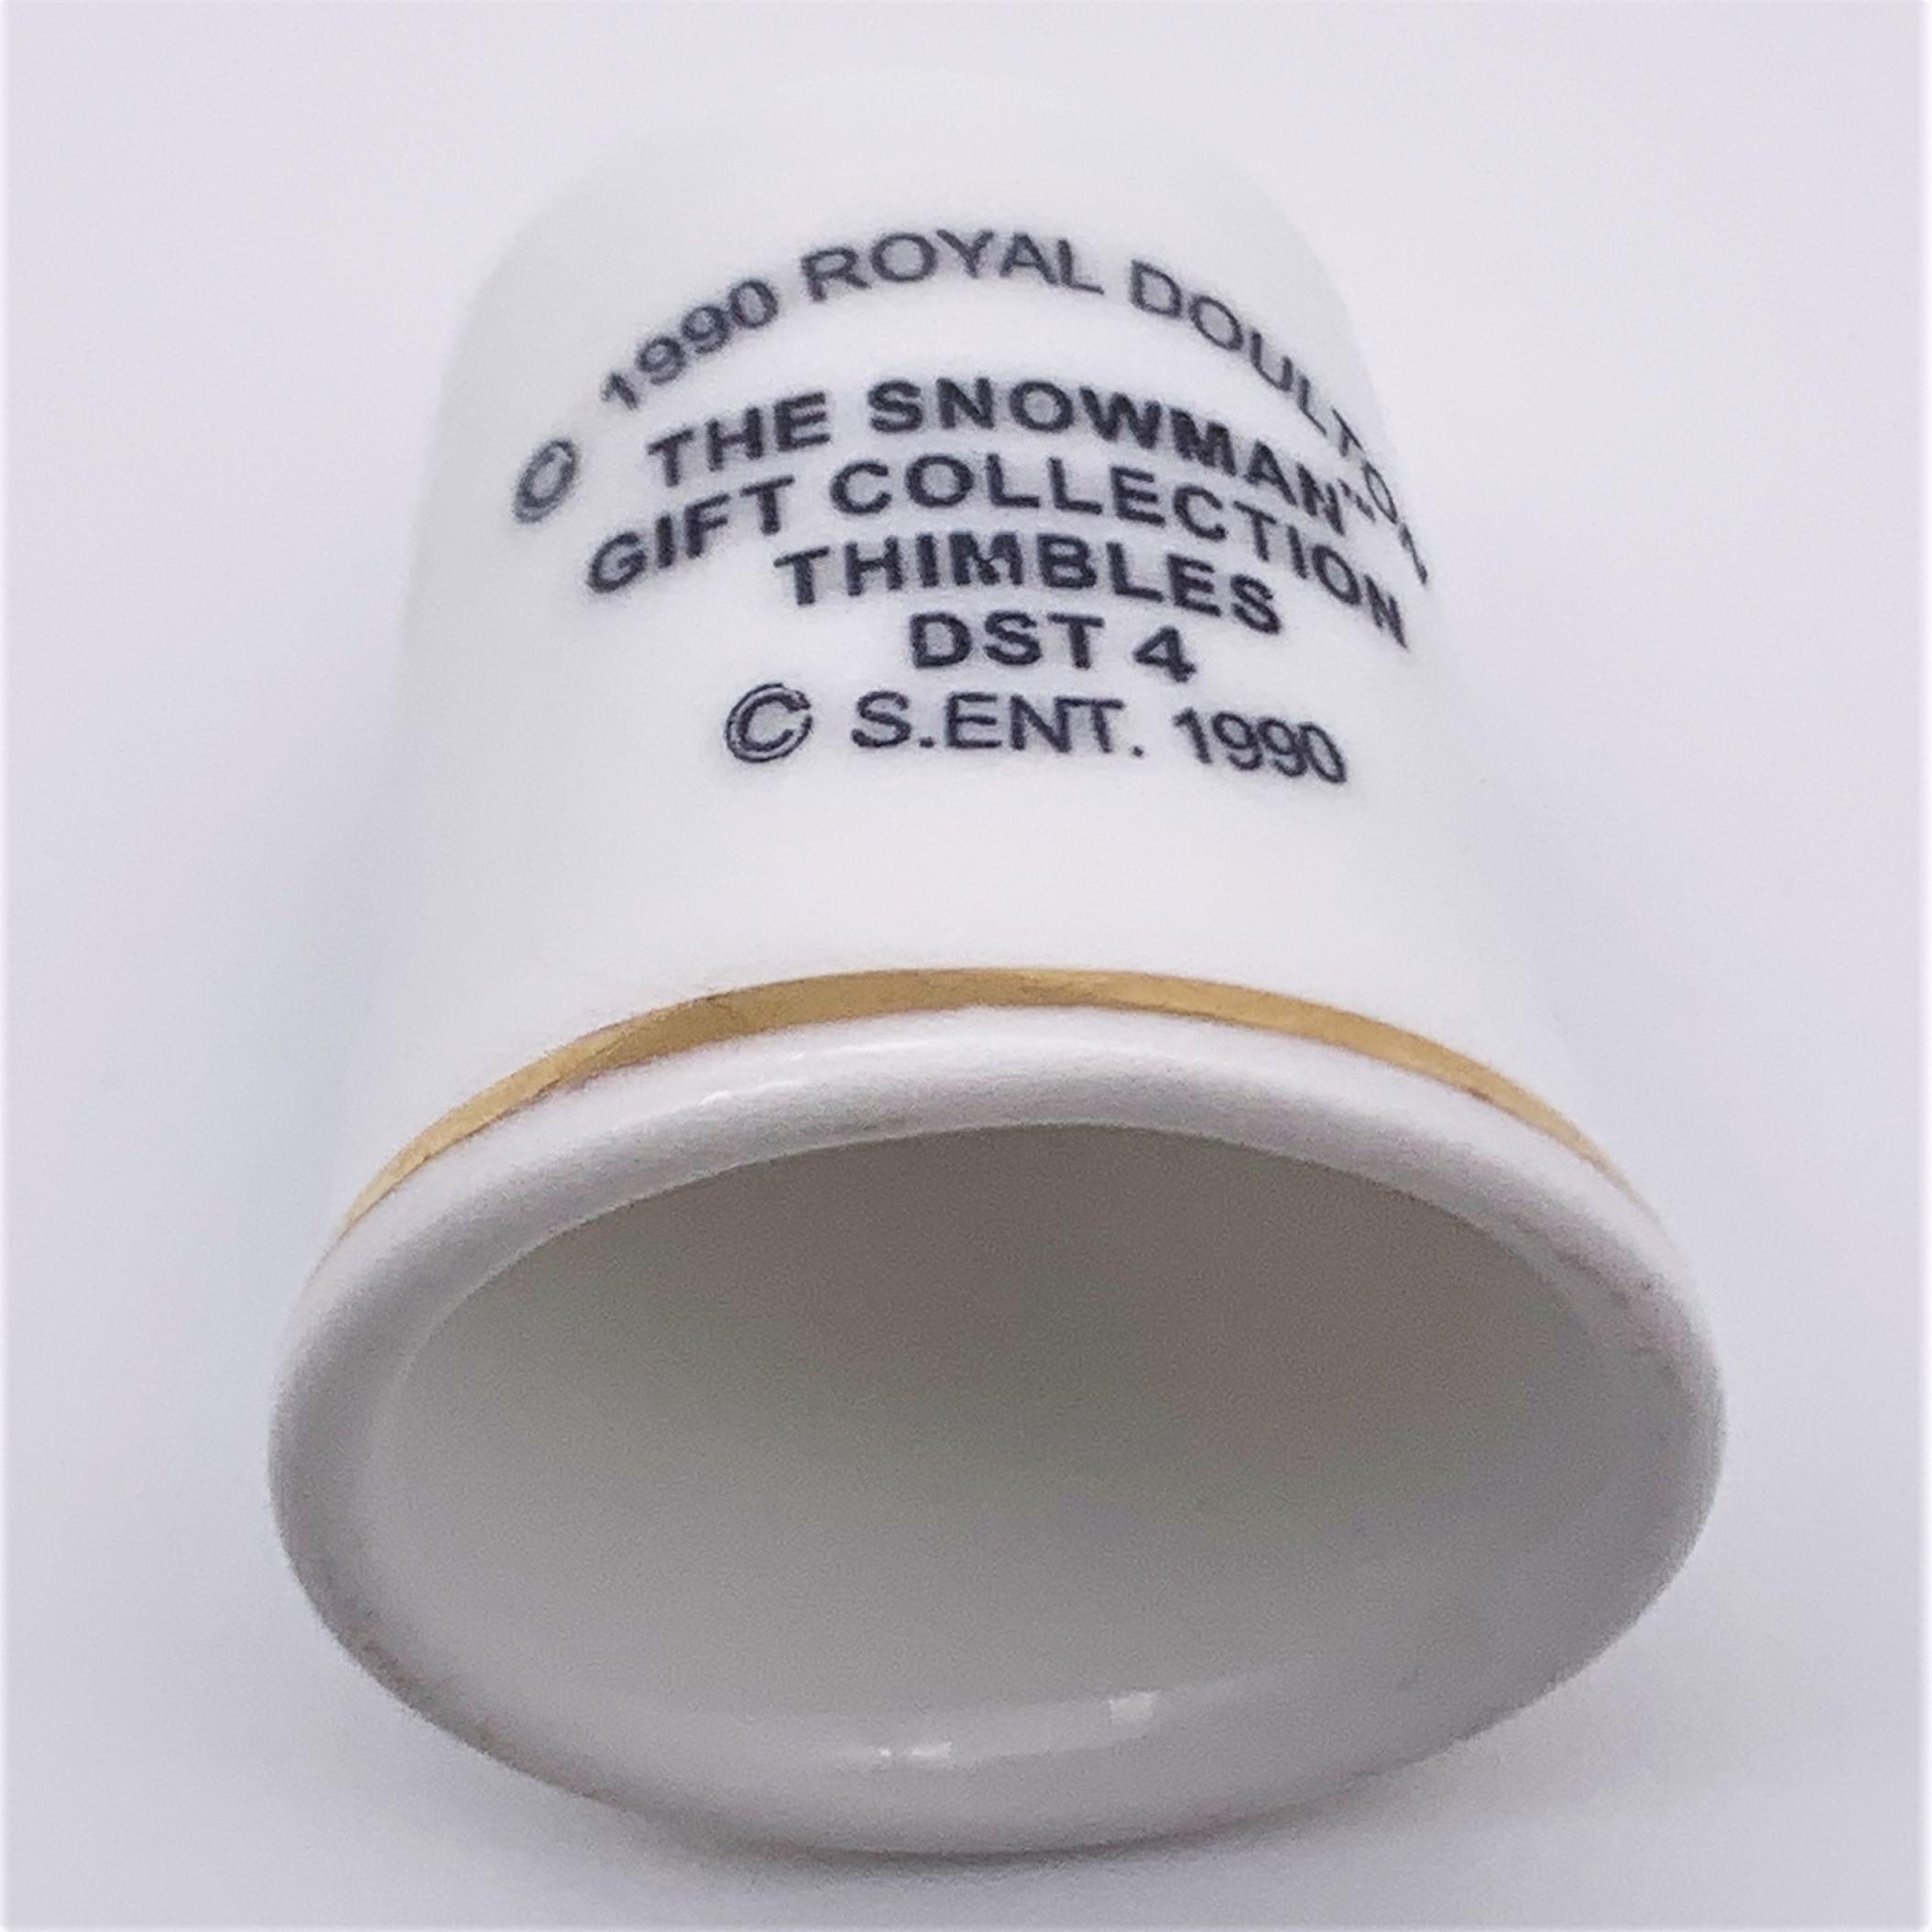 Royal Doulton Prototype Thimble - DST4 Cowboy Snowman - inside